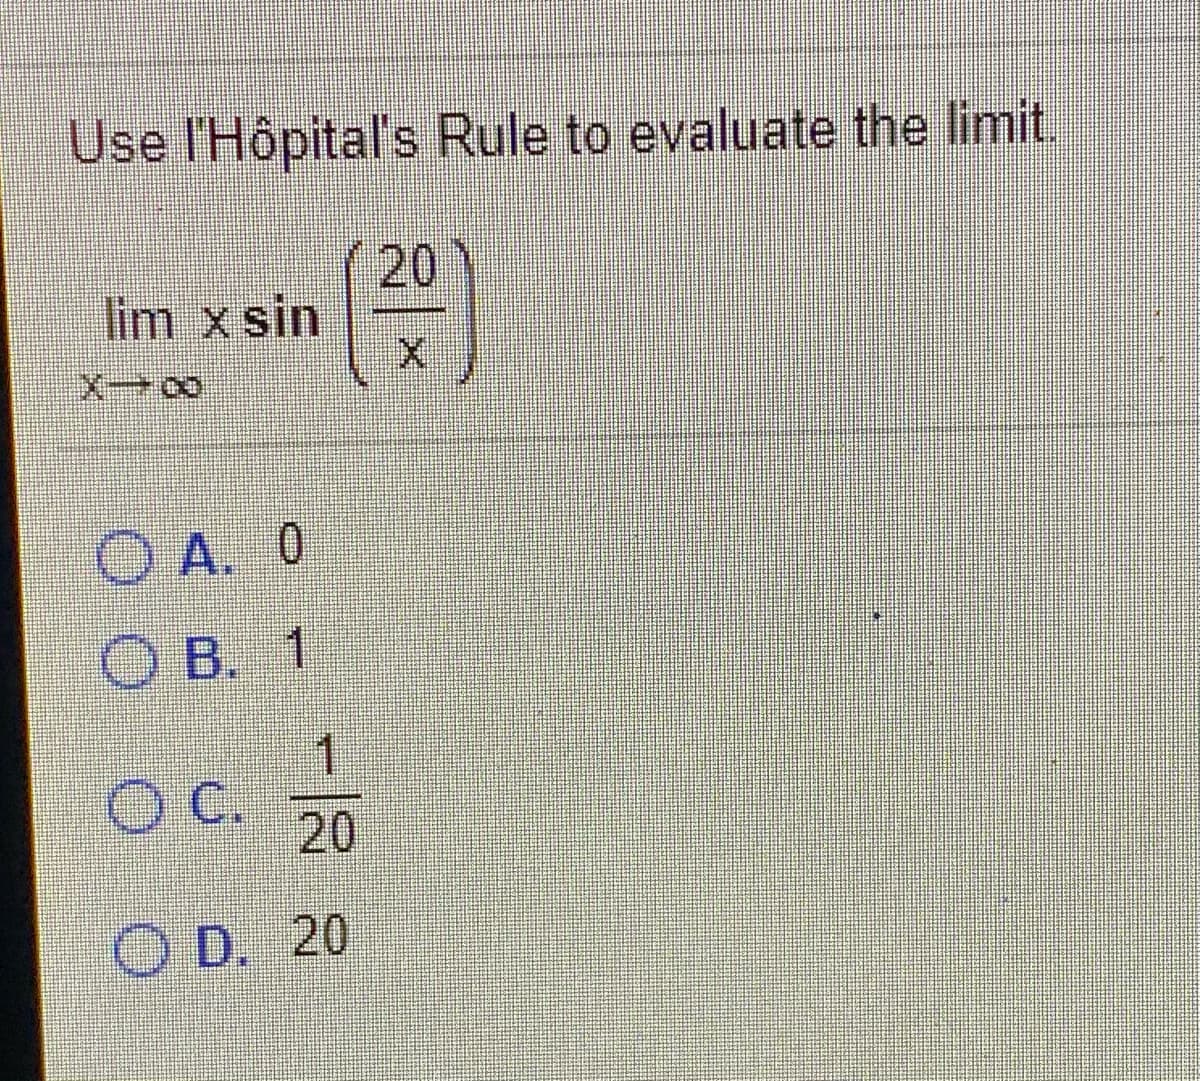 Use l'Hôpital's Rule to evaluate the limit.
(20
lim x sin
OA. 0
O B. 1
1
20
O D. 20
